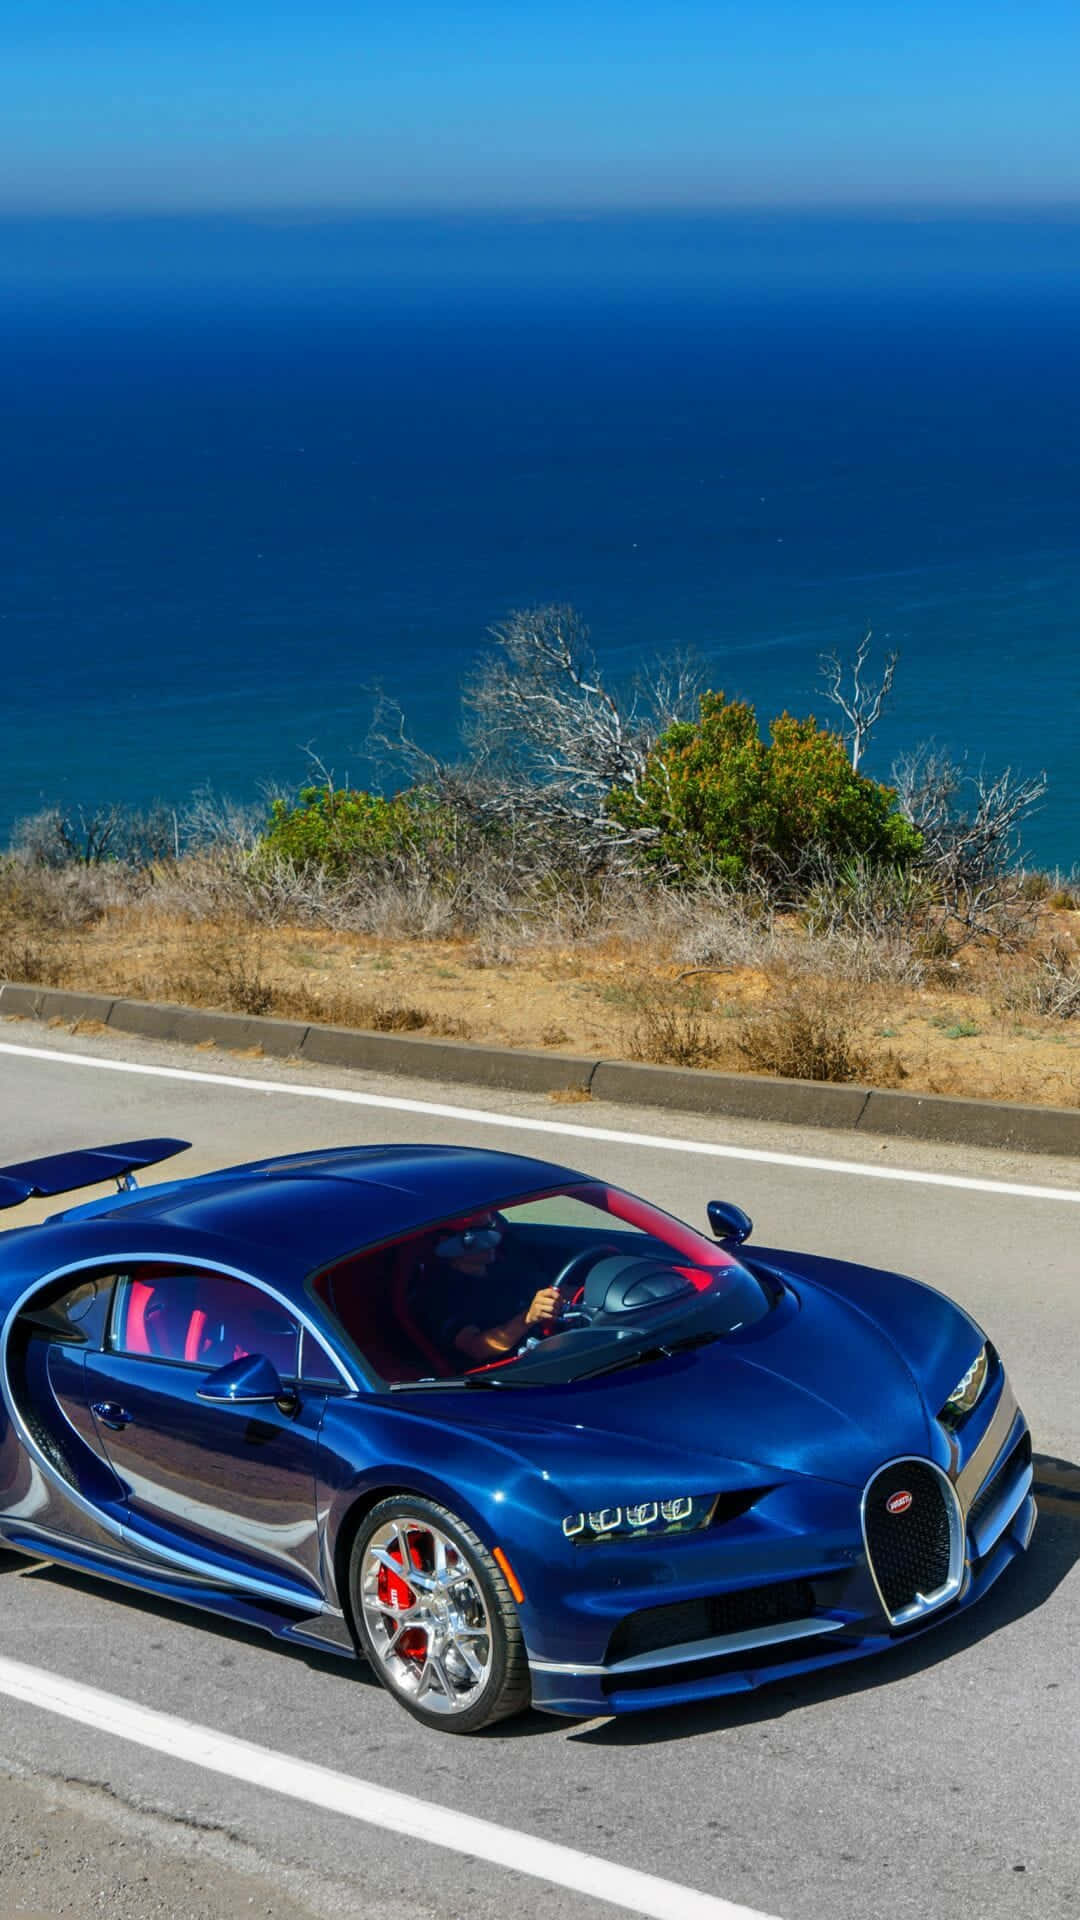 A Look at the Stunning Bugatti Car Wallpaper